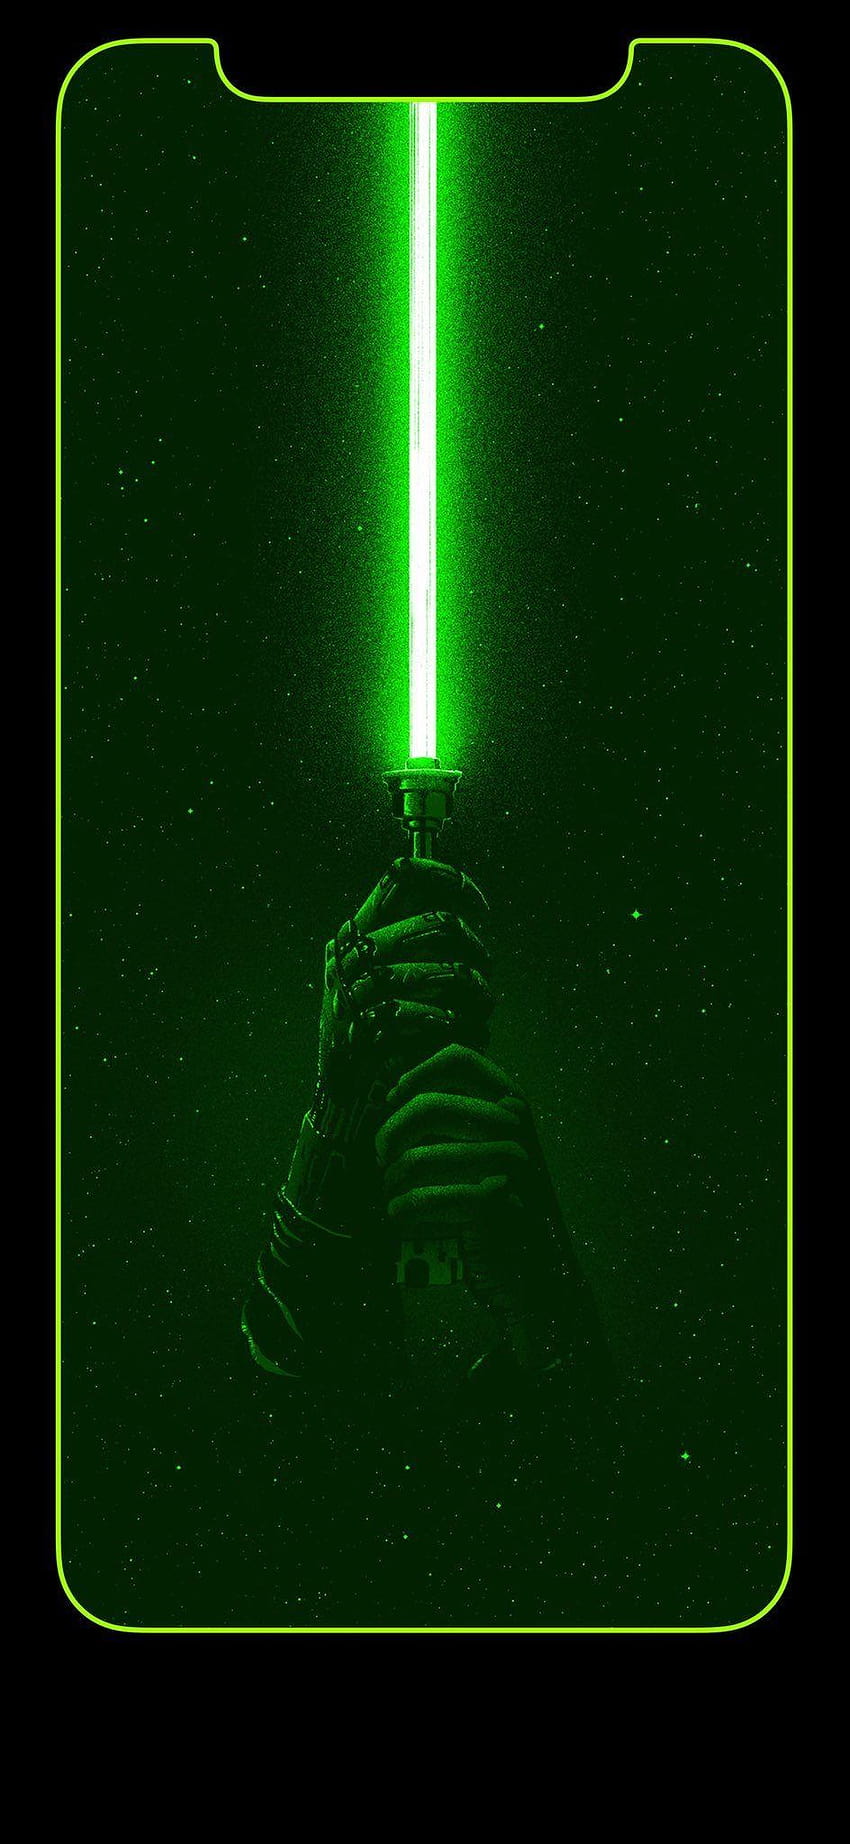 Sable de luz verde de Star Wars, sable de luz verde de luke skywalker fondo de pantalla del teléfono